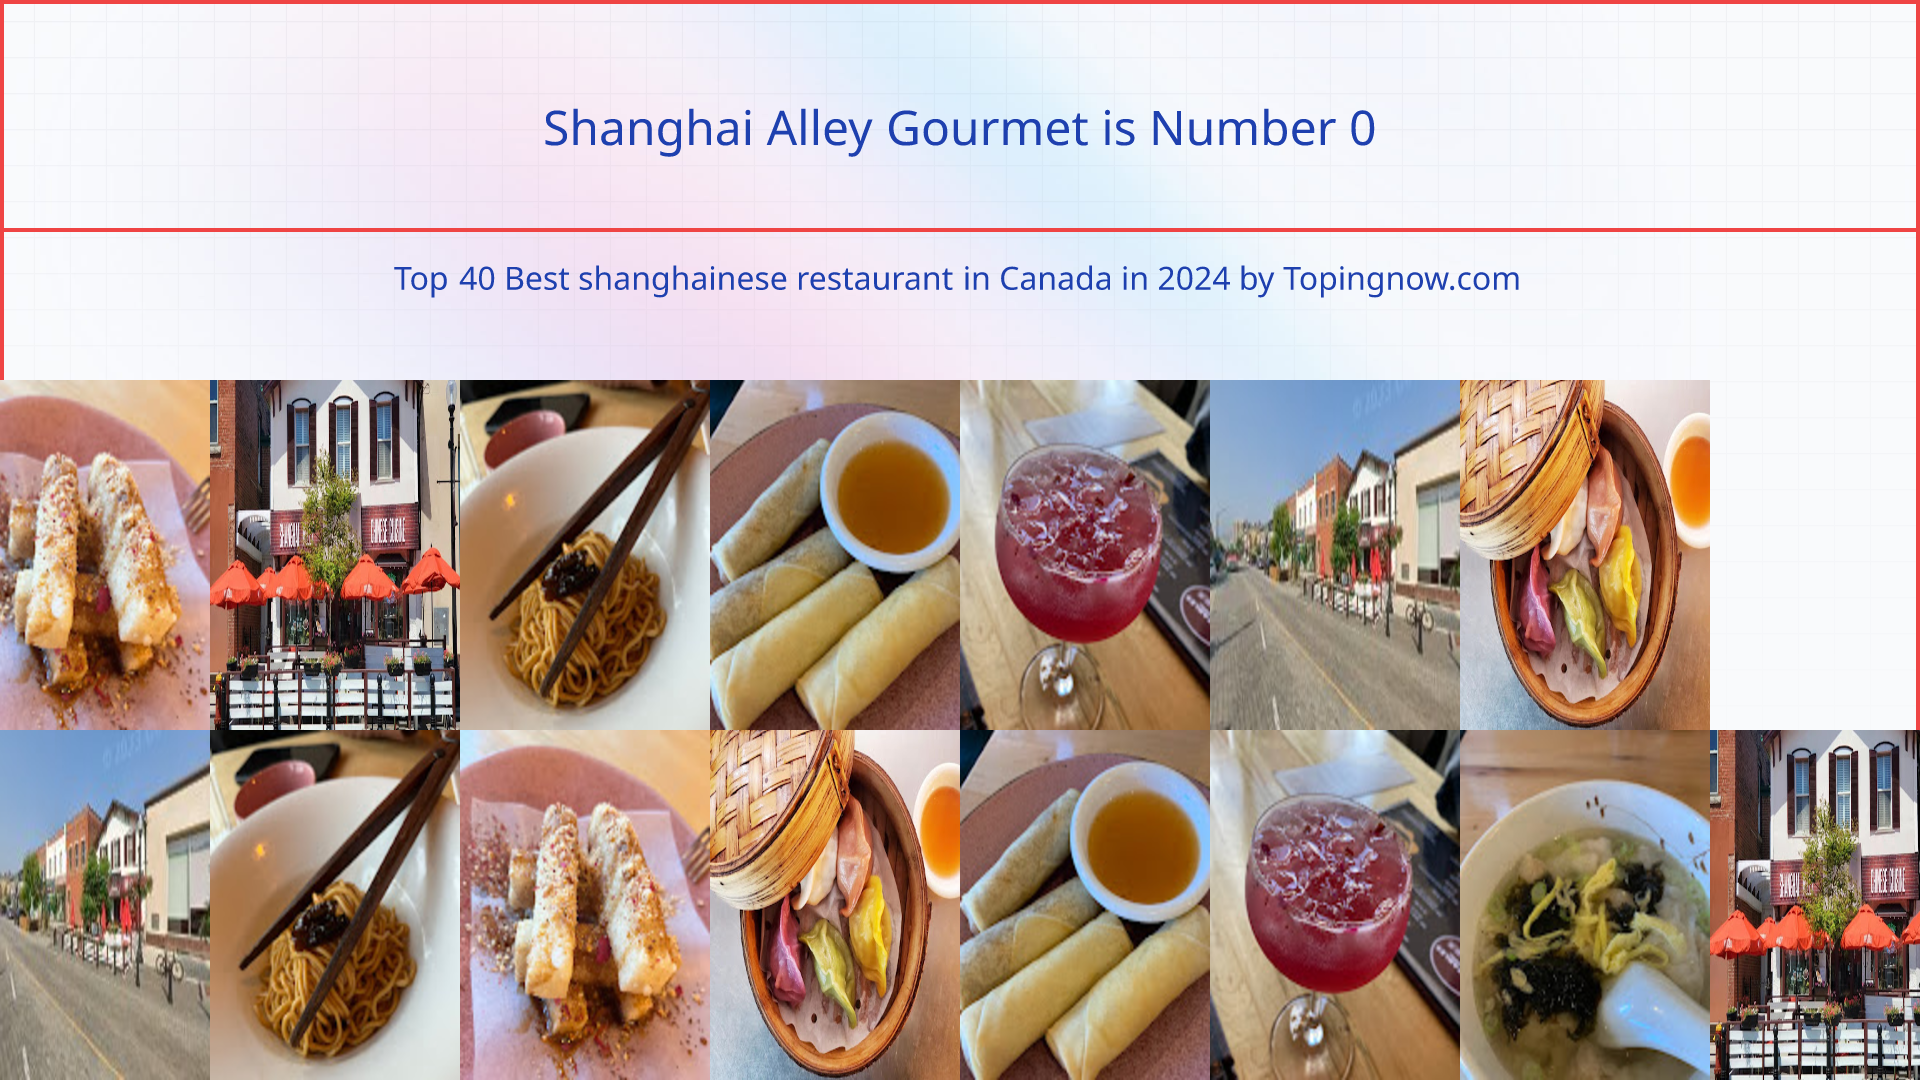 Shanghai Alley Gourmet: Top 40 Best shanghainese restaurant in Canada in 2024